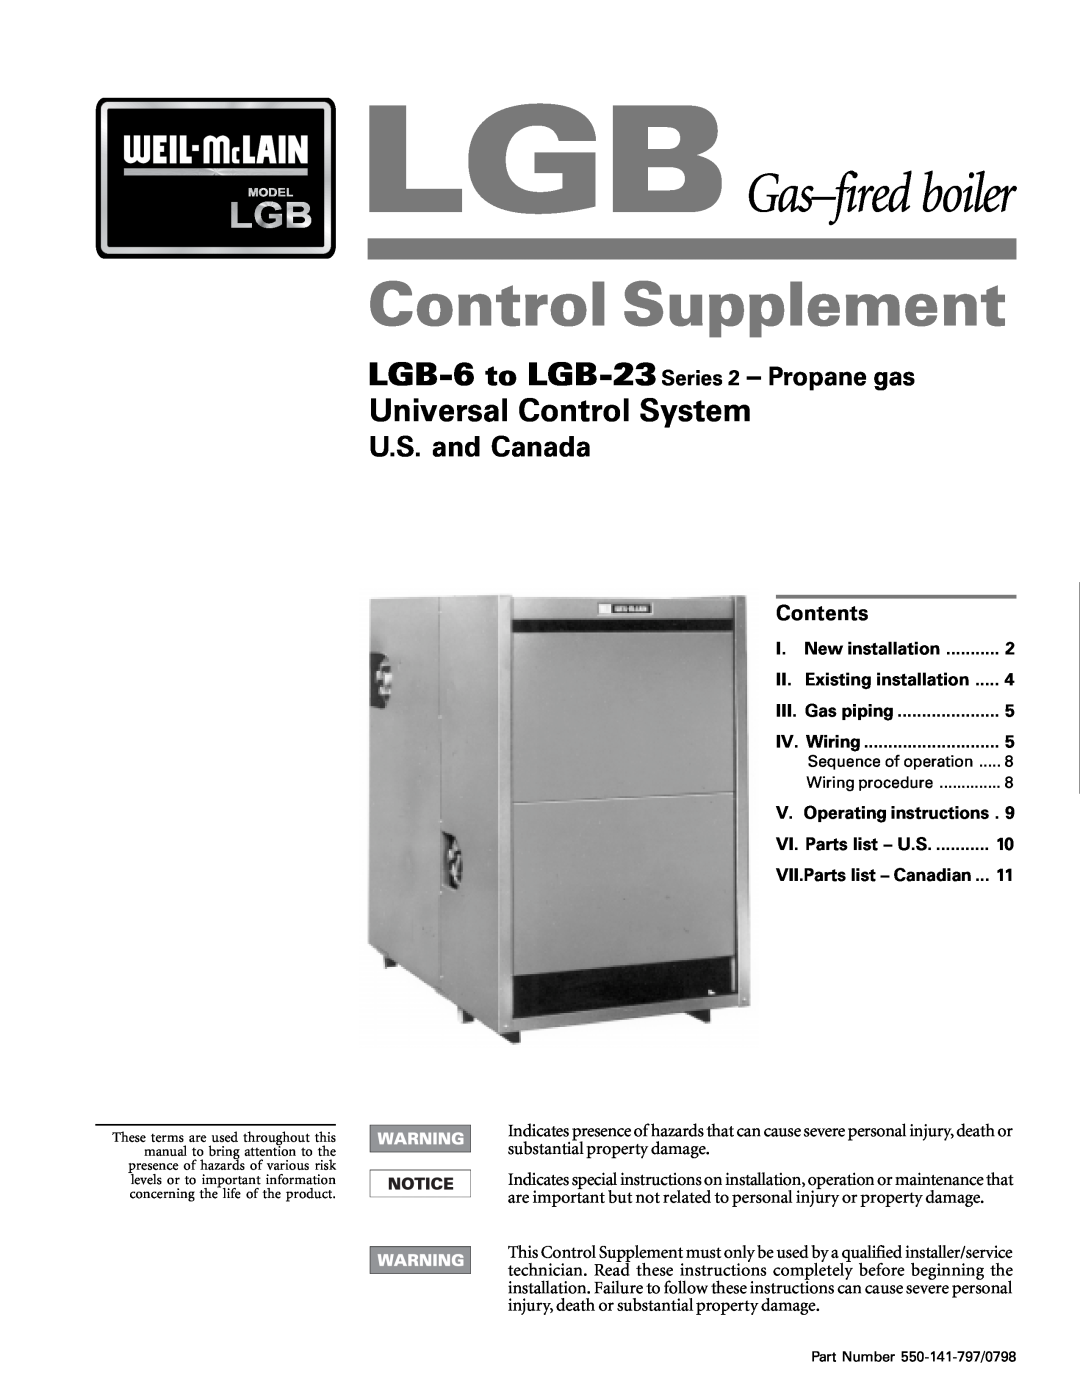 Weil-McLain LGB-14 manual V. Operating instructions, VI. Parts list - U.S, LGBGas-firedboiler, Universal Control System 